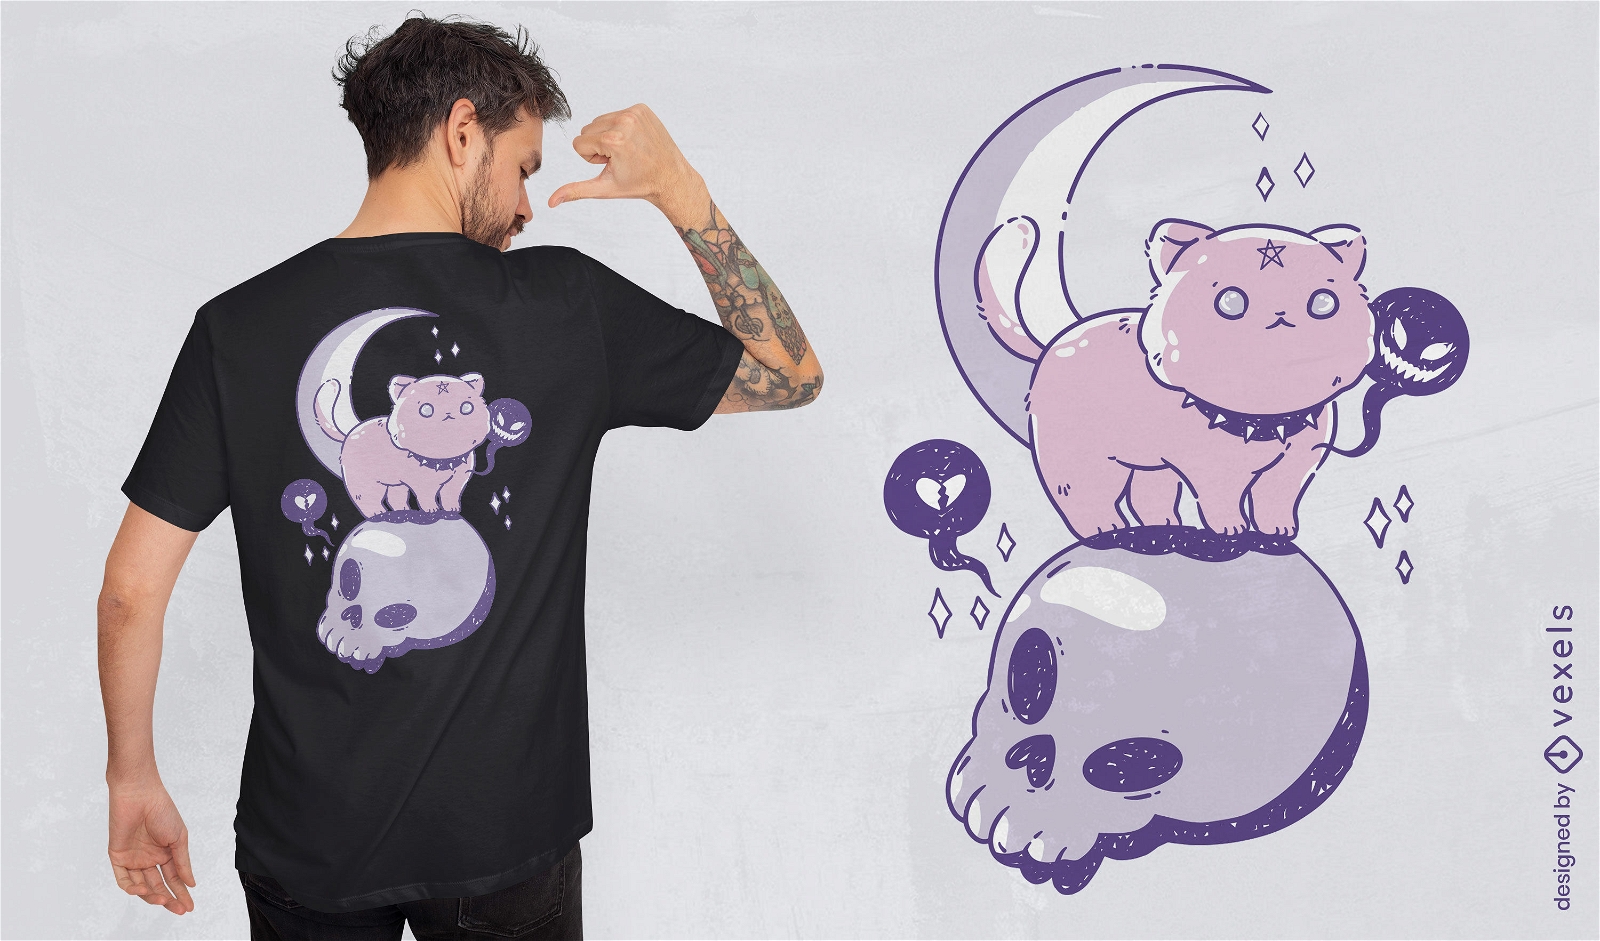 Goth cat animal on skull t-shirt design